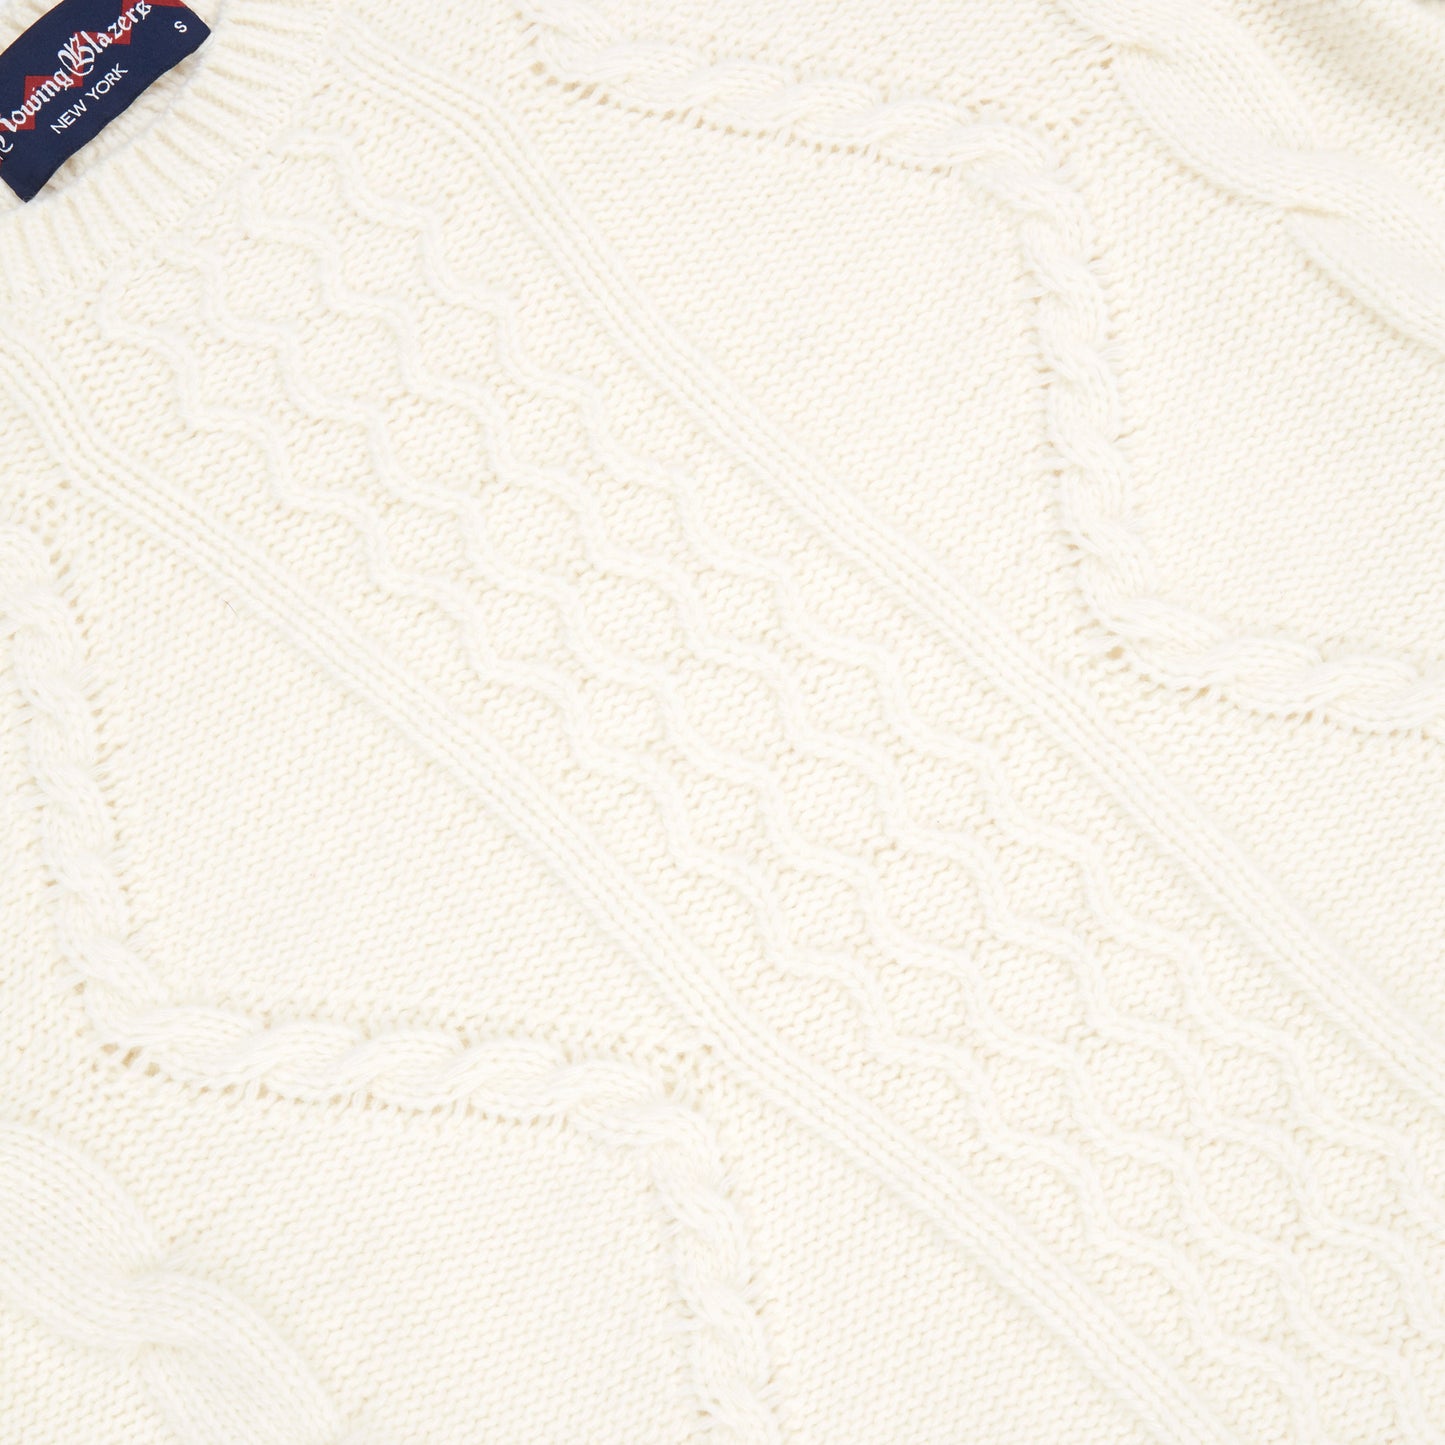 Women's Fisherman Cable Knit Sweater Dress